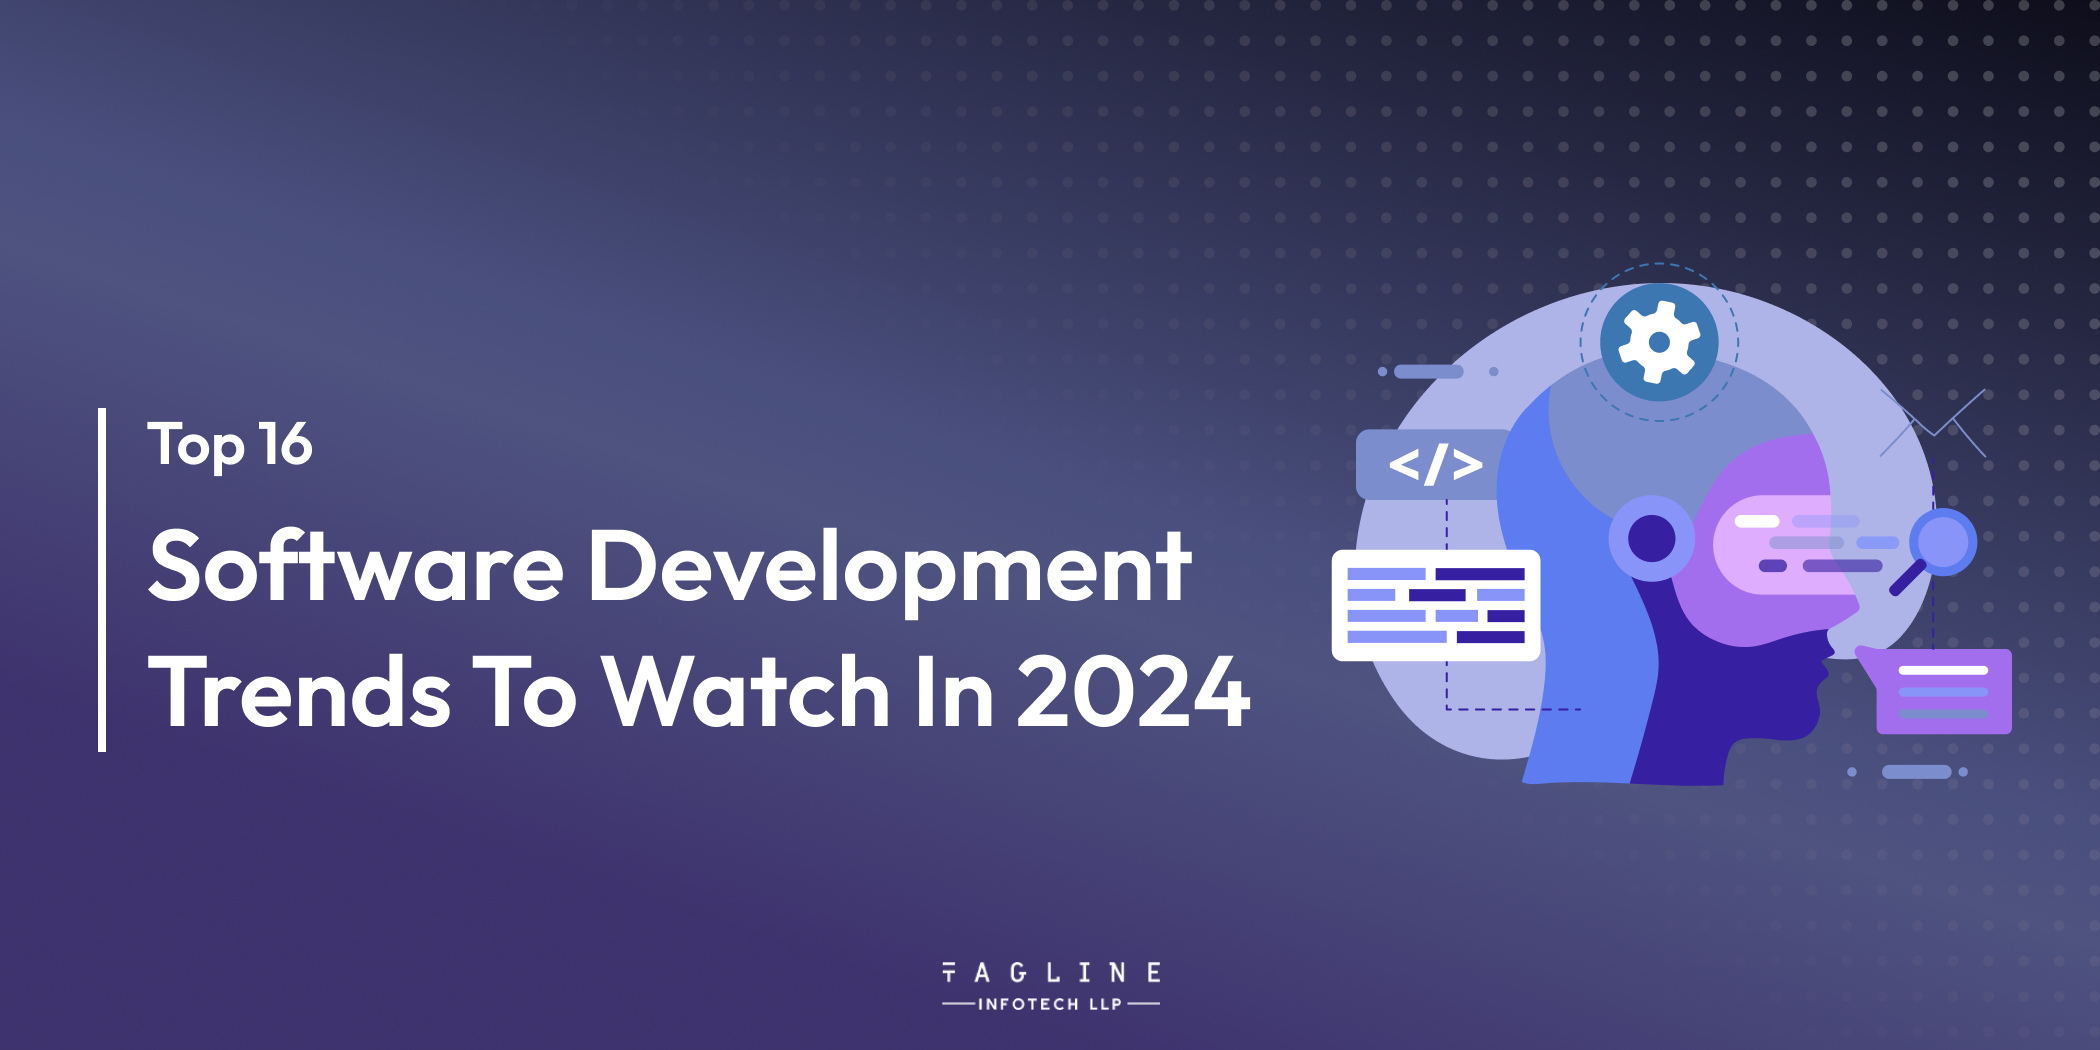 Top 16 Software Development Trends to Watch in 2024